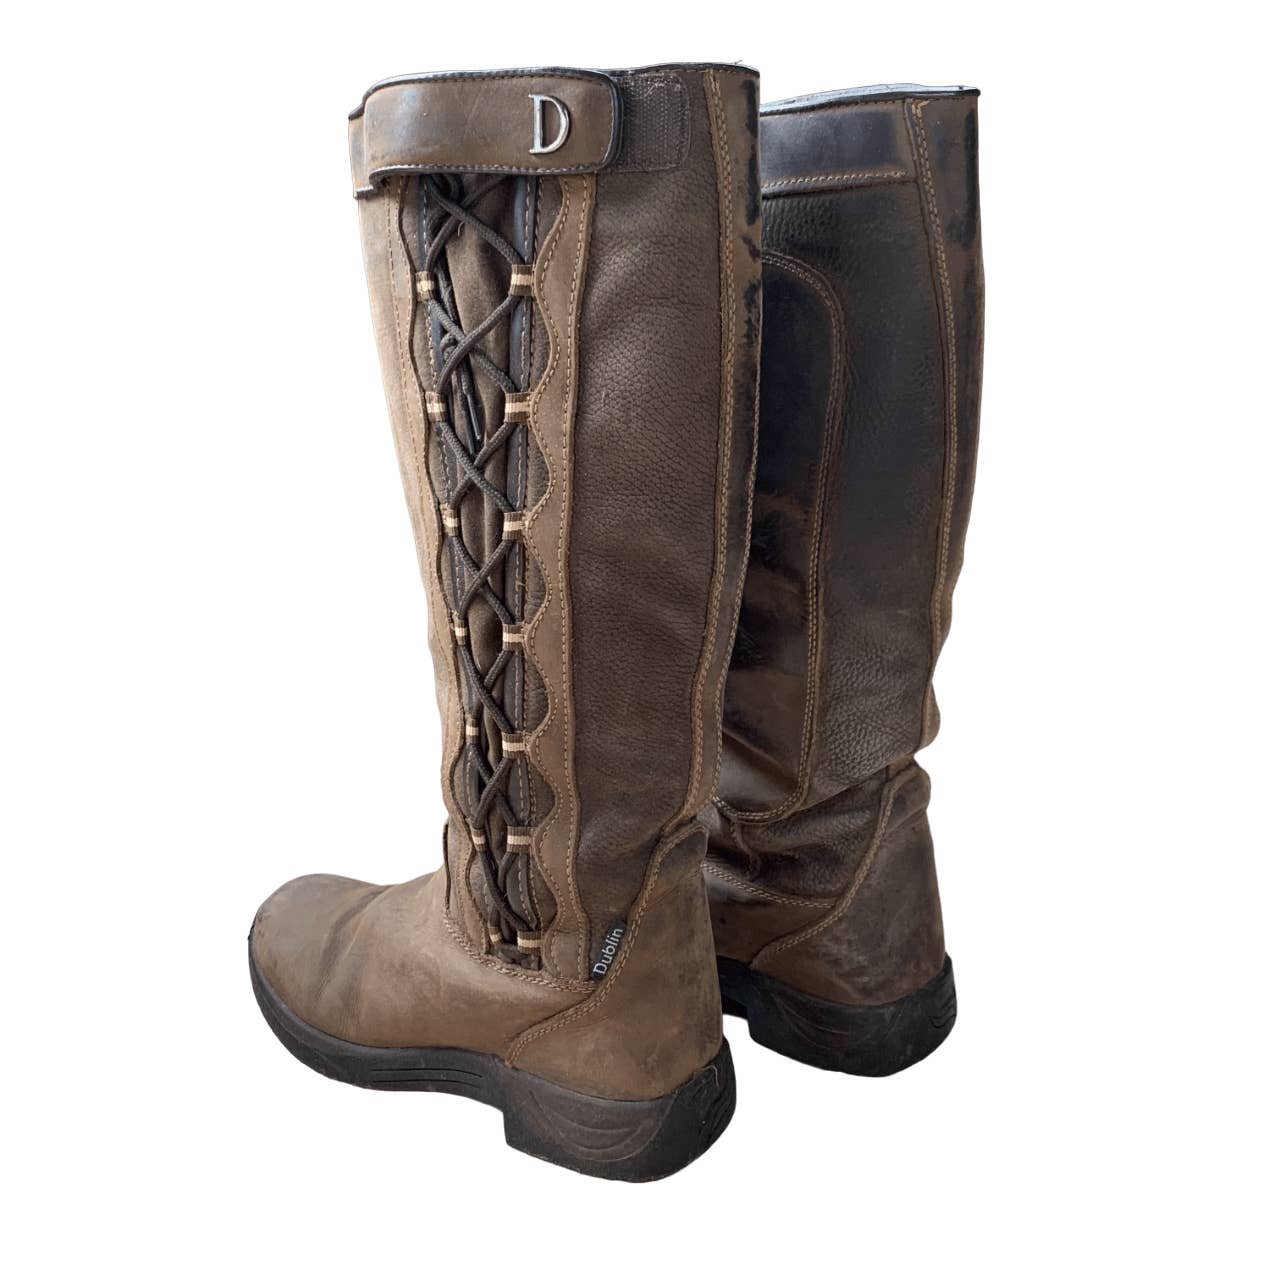 Dublin 'Pinnacle' Boots in Chocolate Brown - Woman's 8